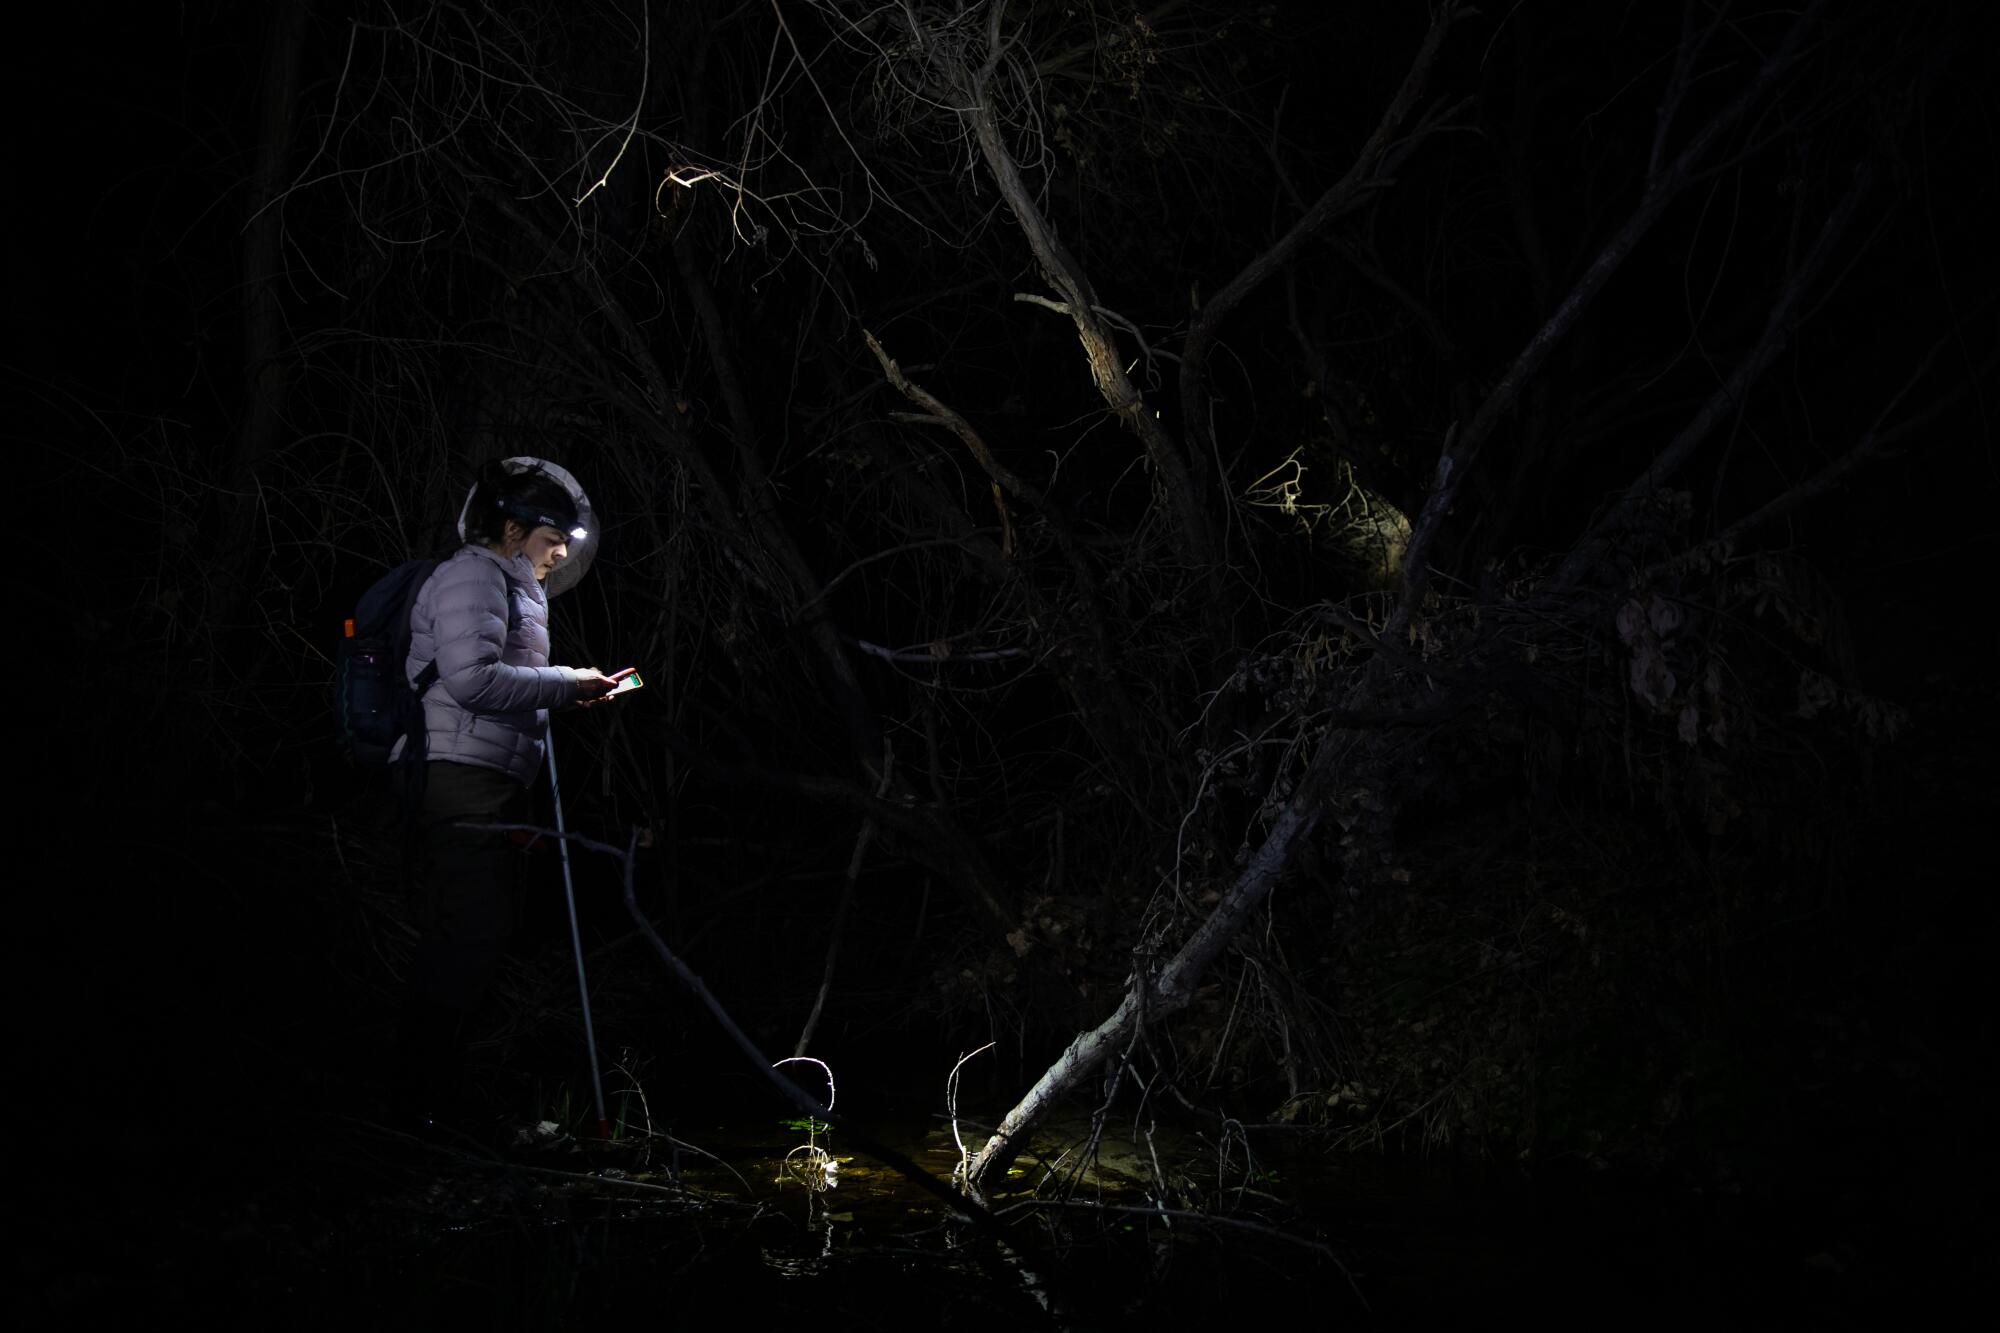 Samantha Birdsong works at night in the dark near a tree